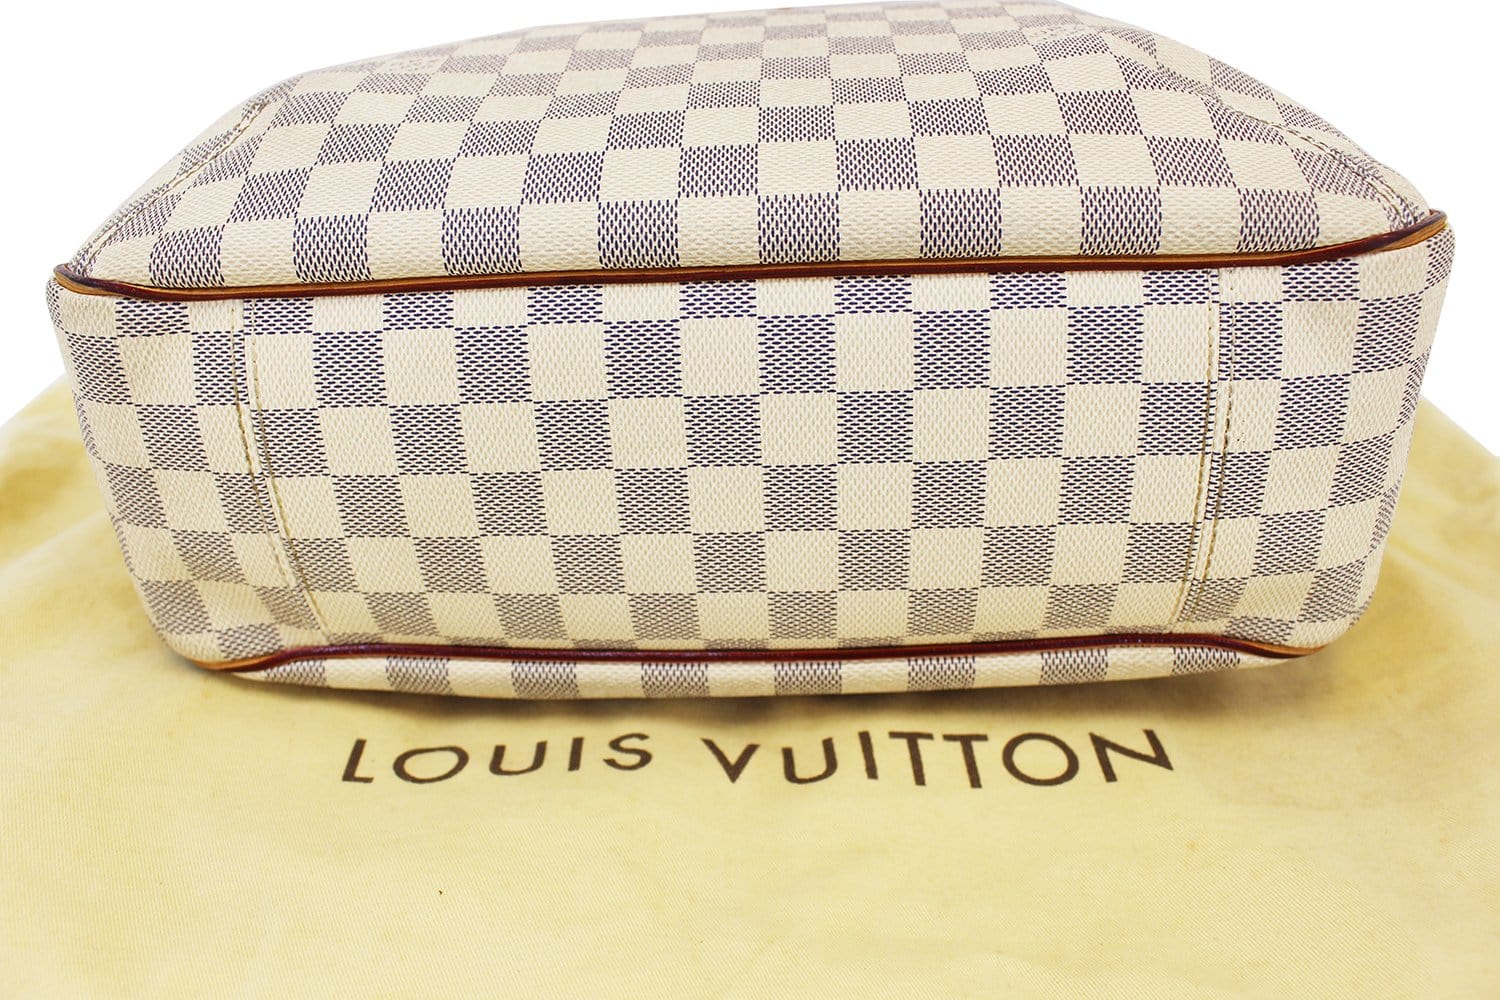 Louis Vuitton Soffi in Damier Azur for Sale in Fort Worth, TX - OfferUp